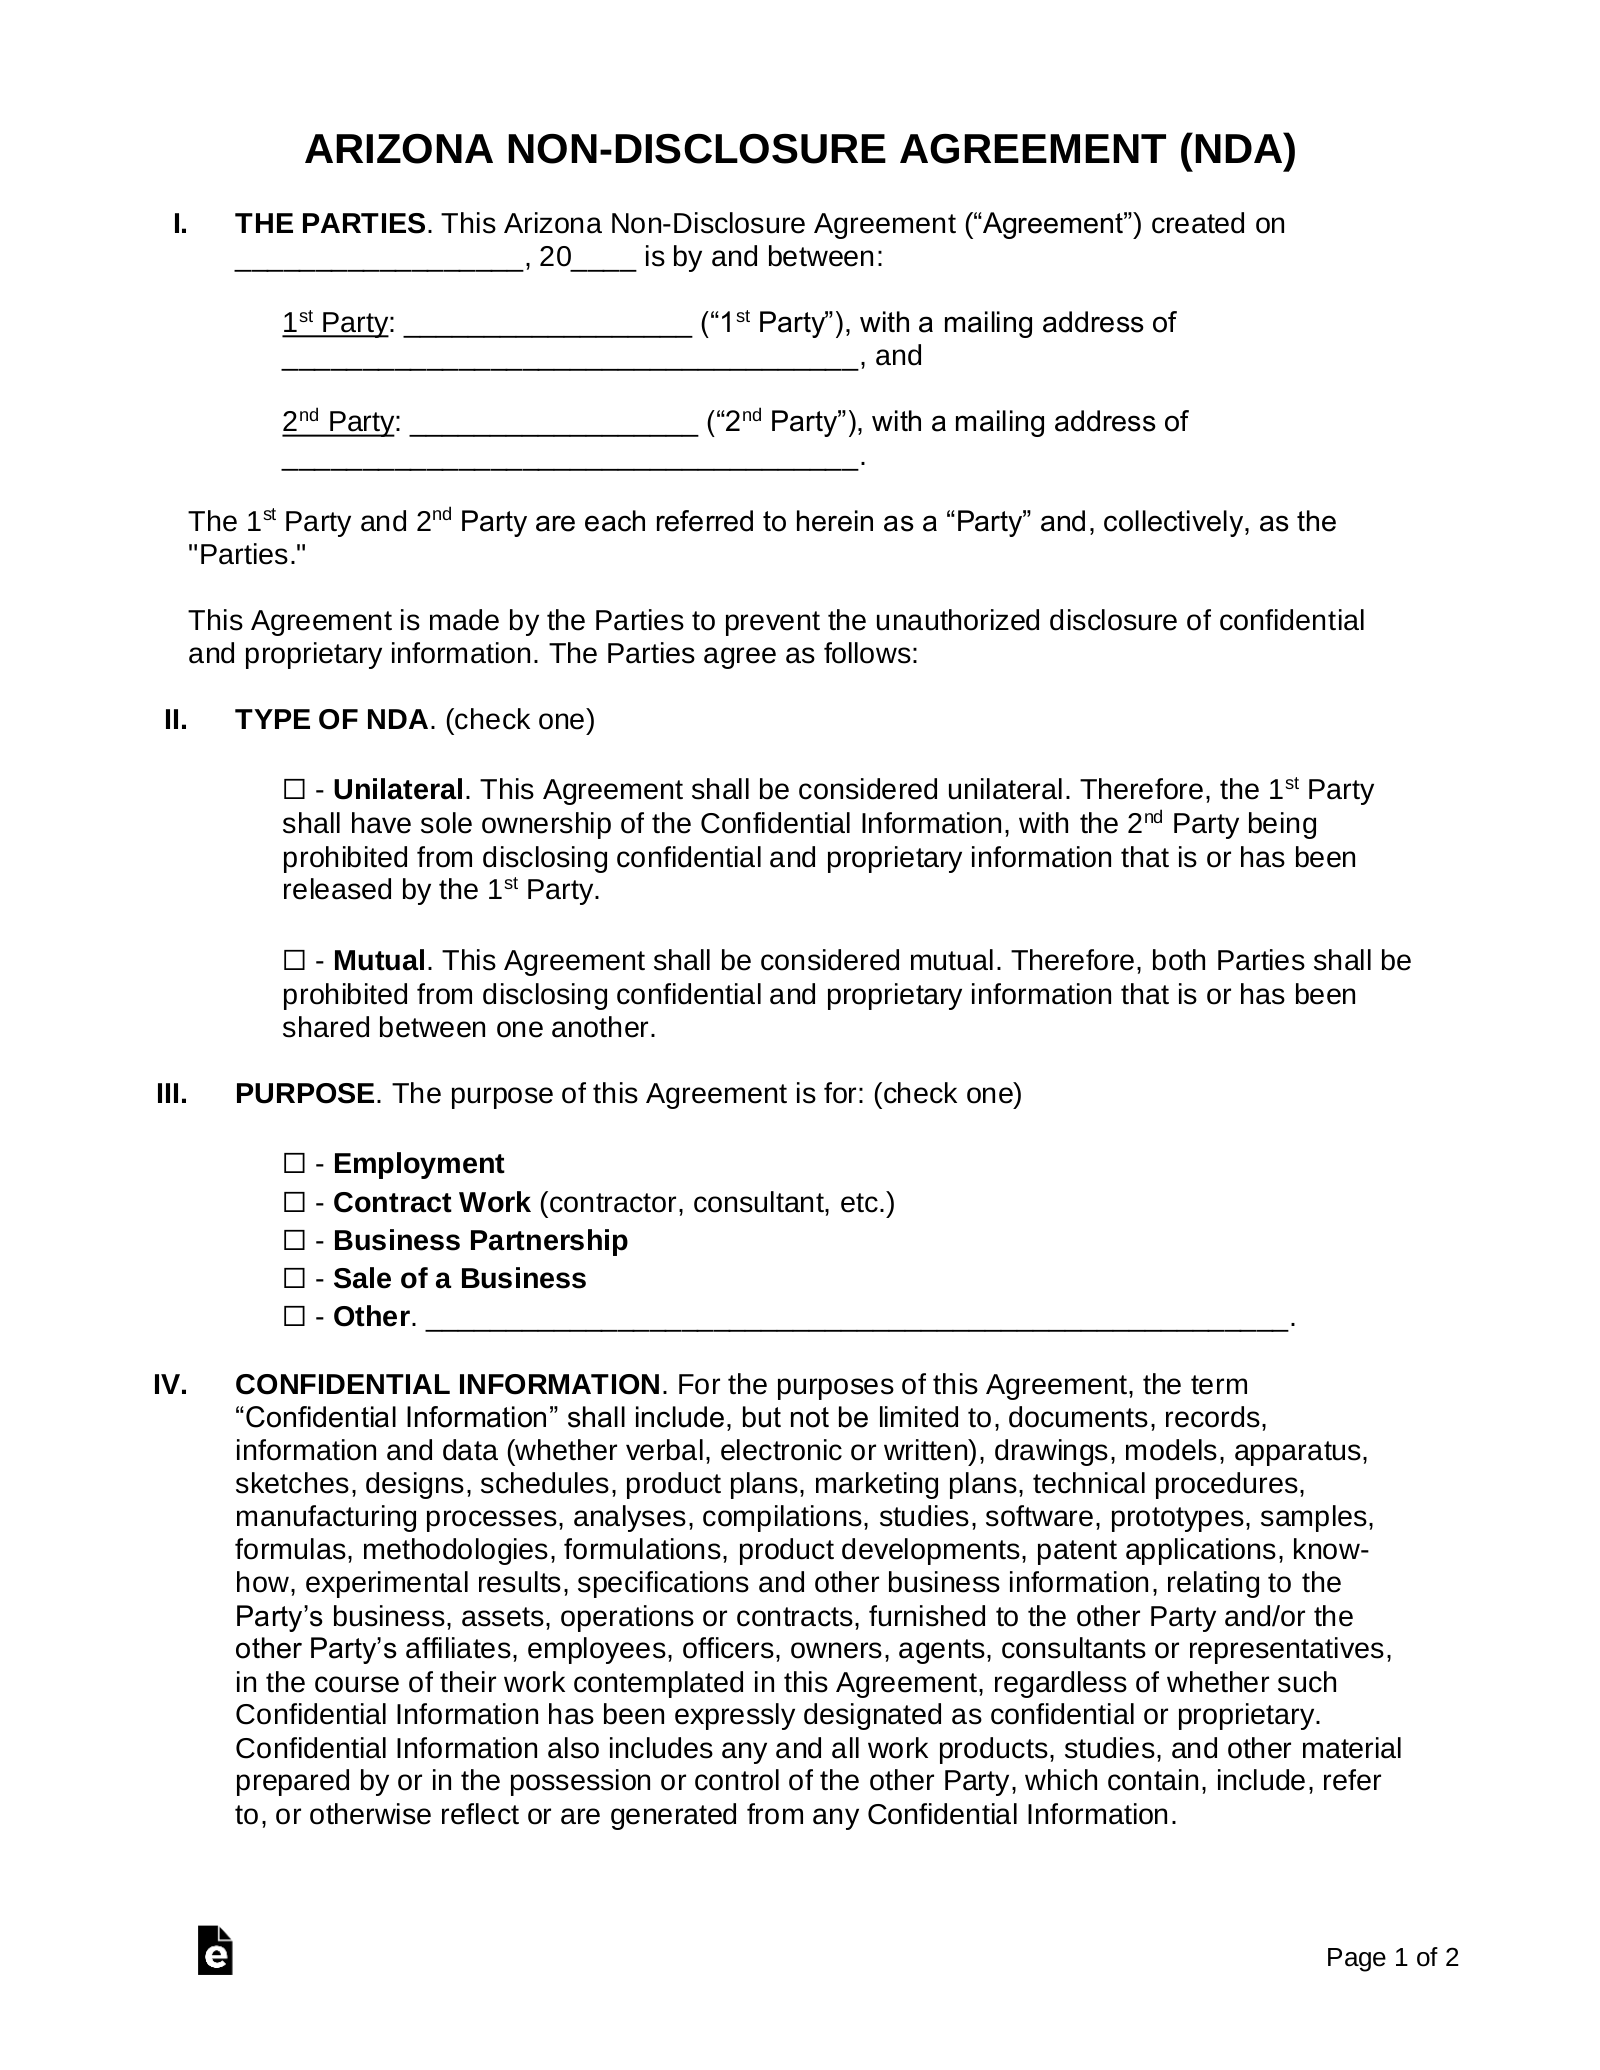 Arizona Non-Disclosure Agreement (NDA) Template